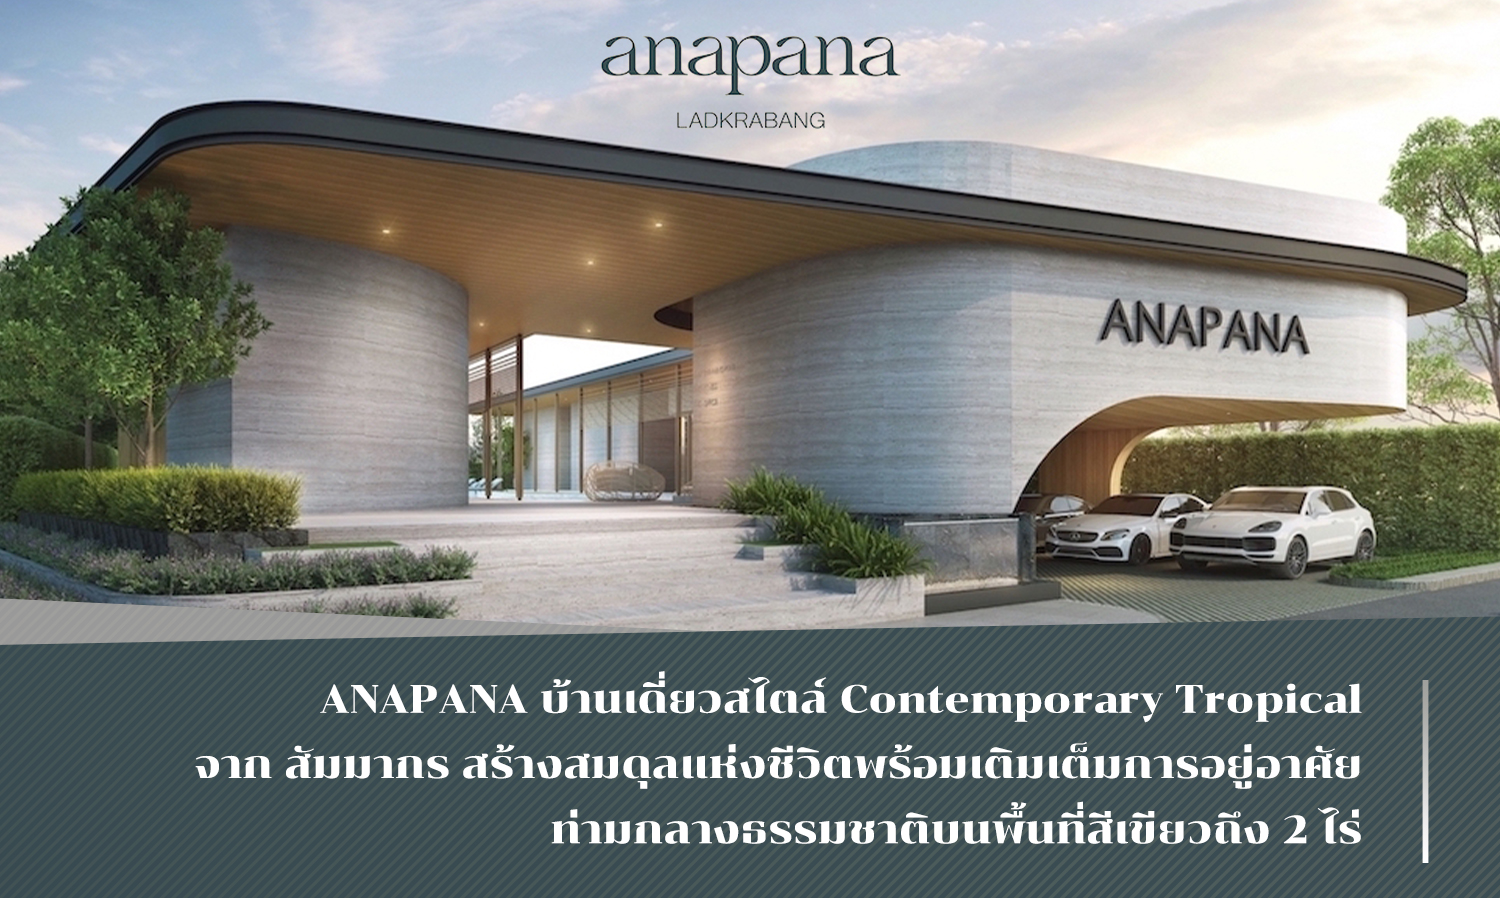 ANAPANA บ้านเดี่ยวสไตล์ Contemporary Tropical จาก สัมมากร สร้างสมดุลแห่งชีวิตพร้อมเติมเต็มการอยู่อาศัยท่ามกลางธรรมชาติบนพื้นที่สีเขียวถึง 2 ไร่